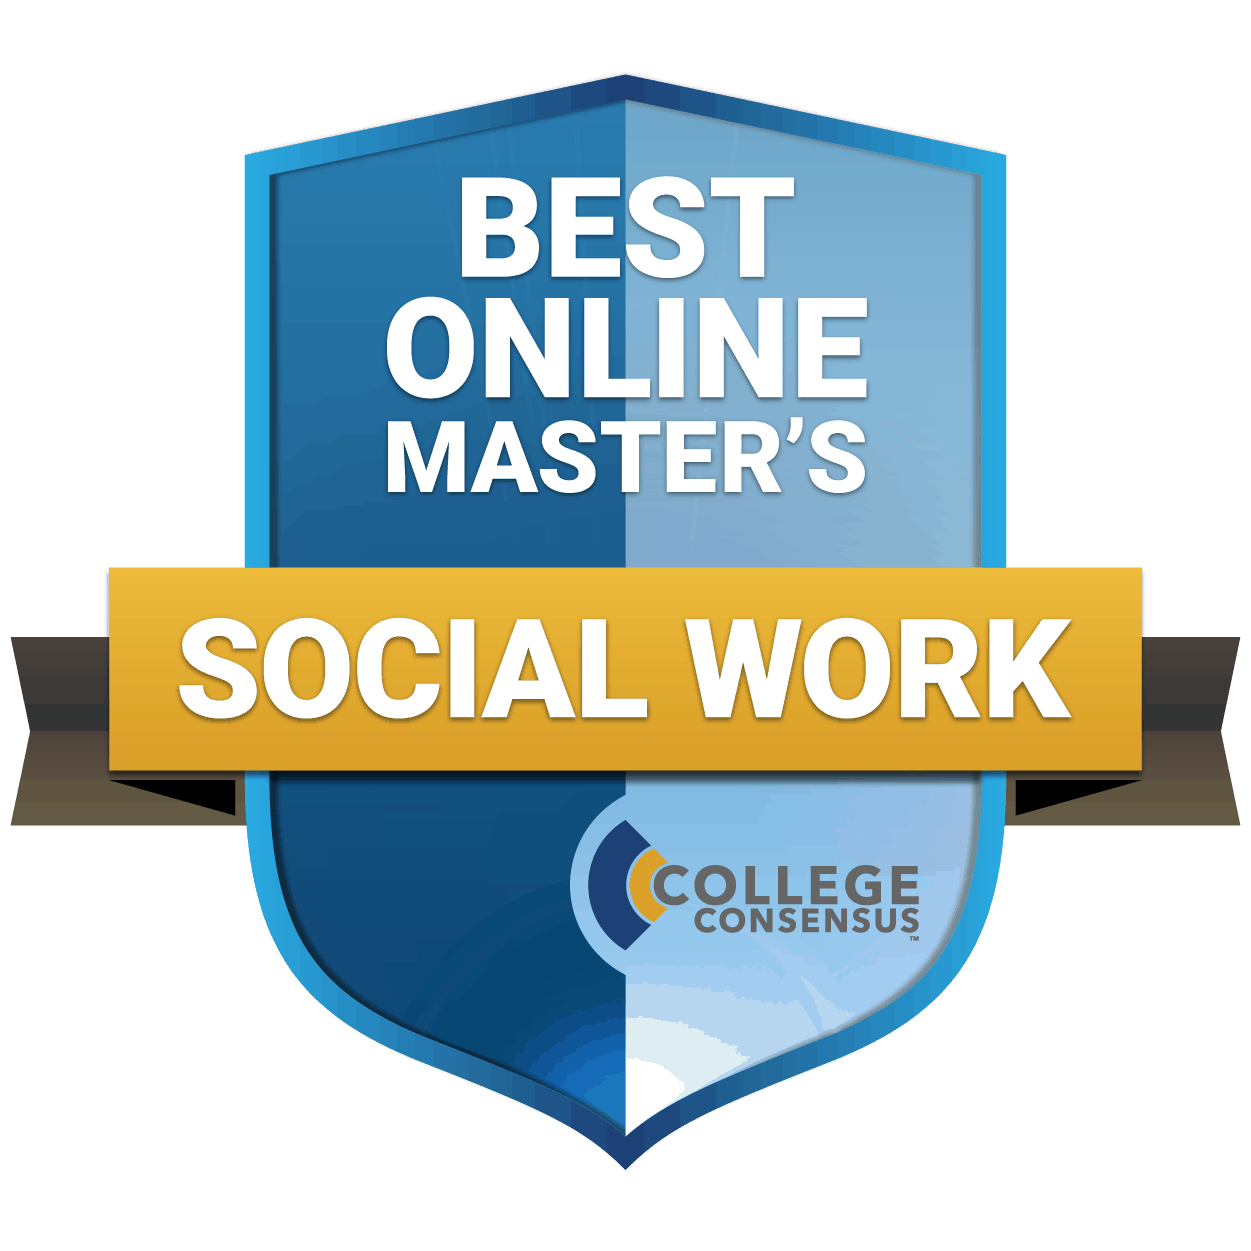 College Consensus Best Online Masters Social Work 02 03 04 